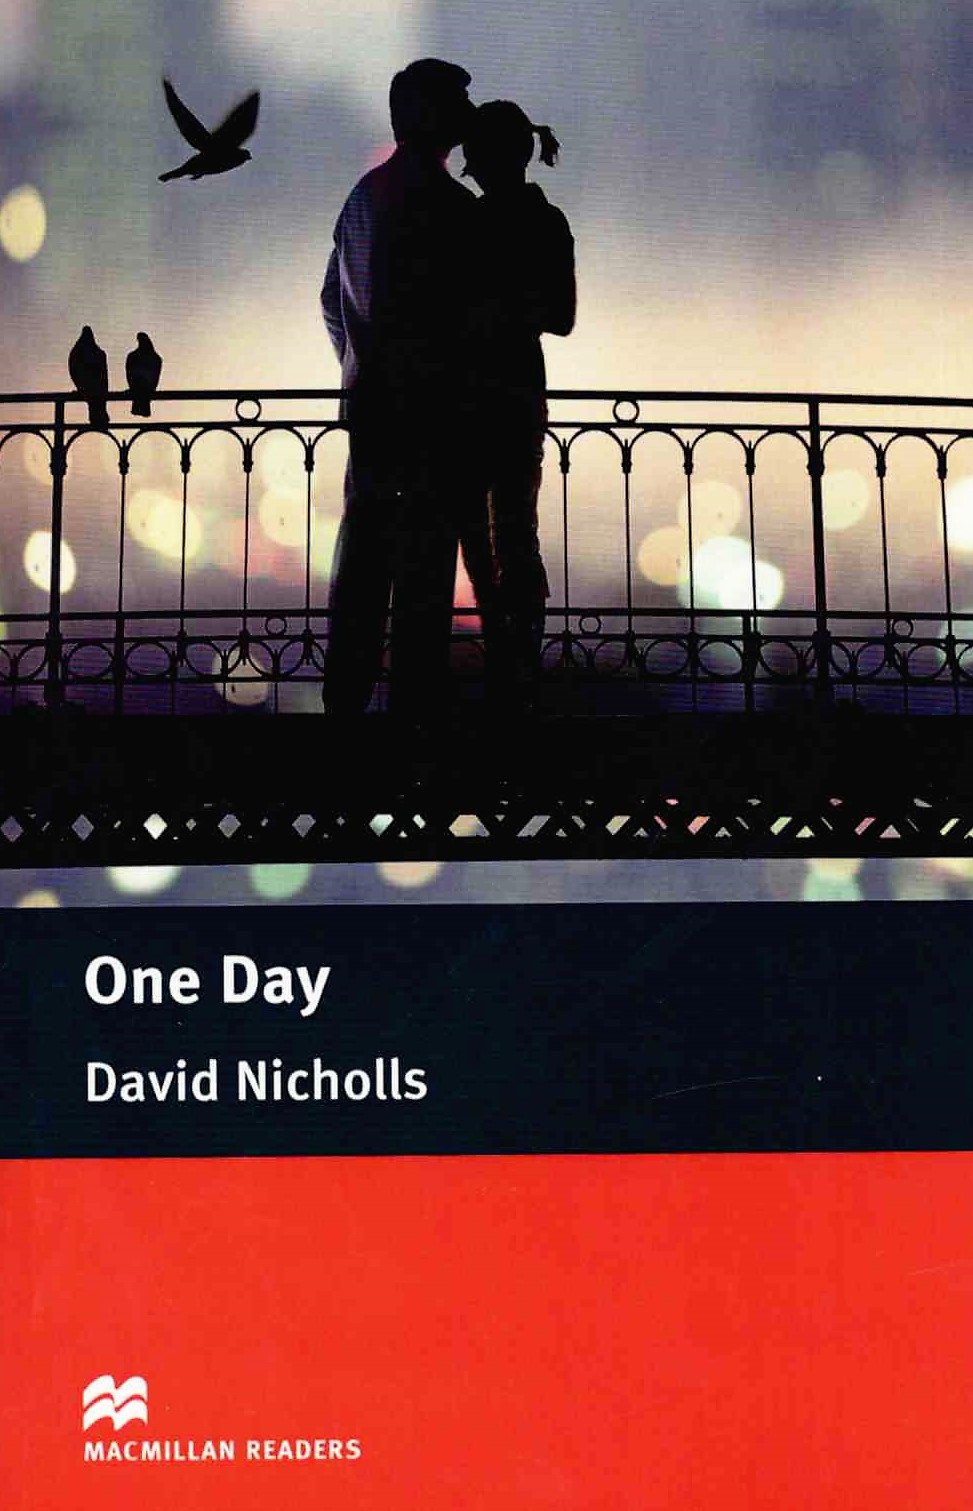 Дэвид николс один день. Nicholls David "one Day". One Day David Nicholls book. David Nicholls one Day pdf. Один день Дэвид Николс книга.